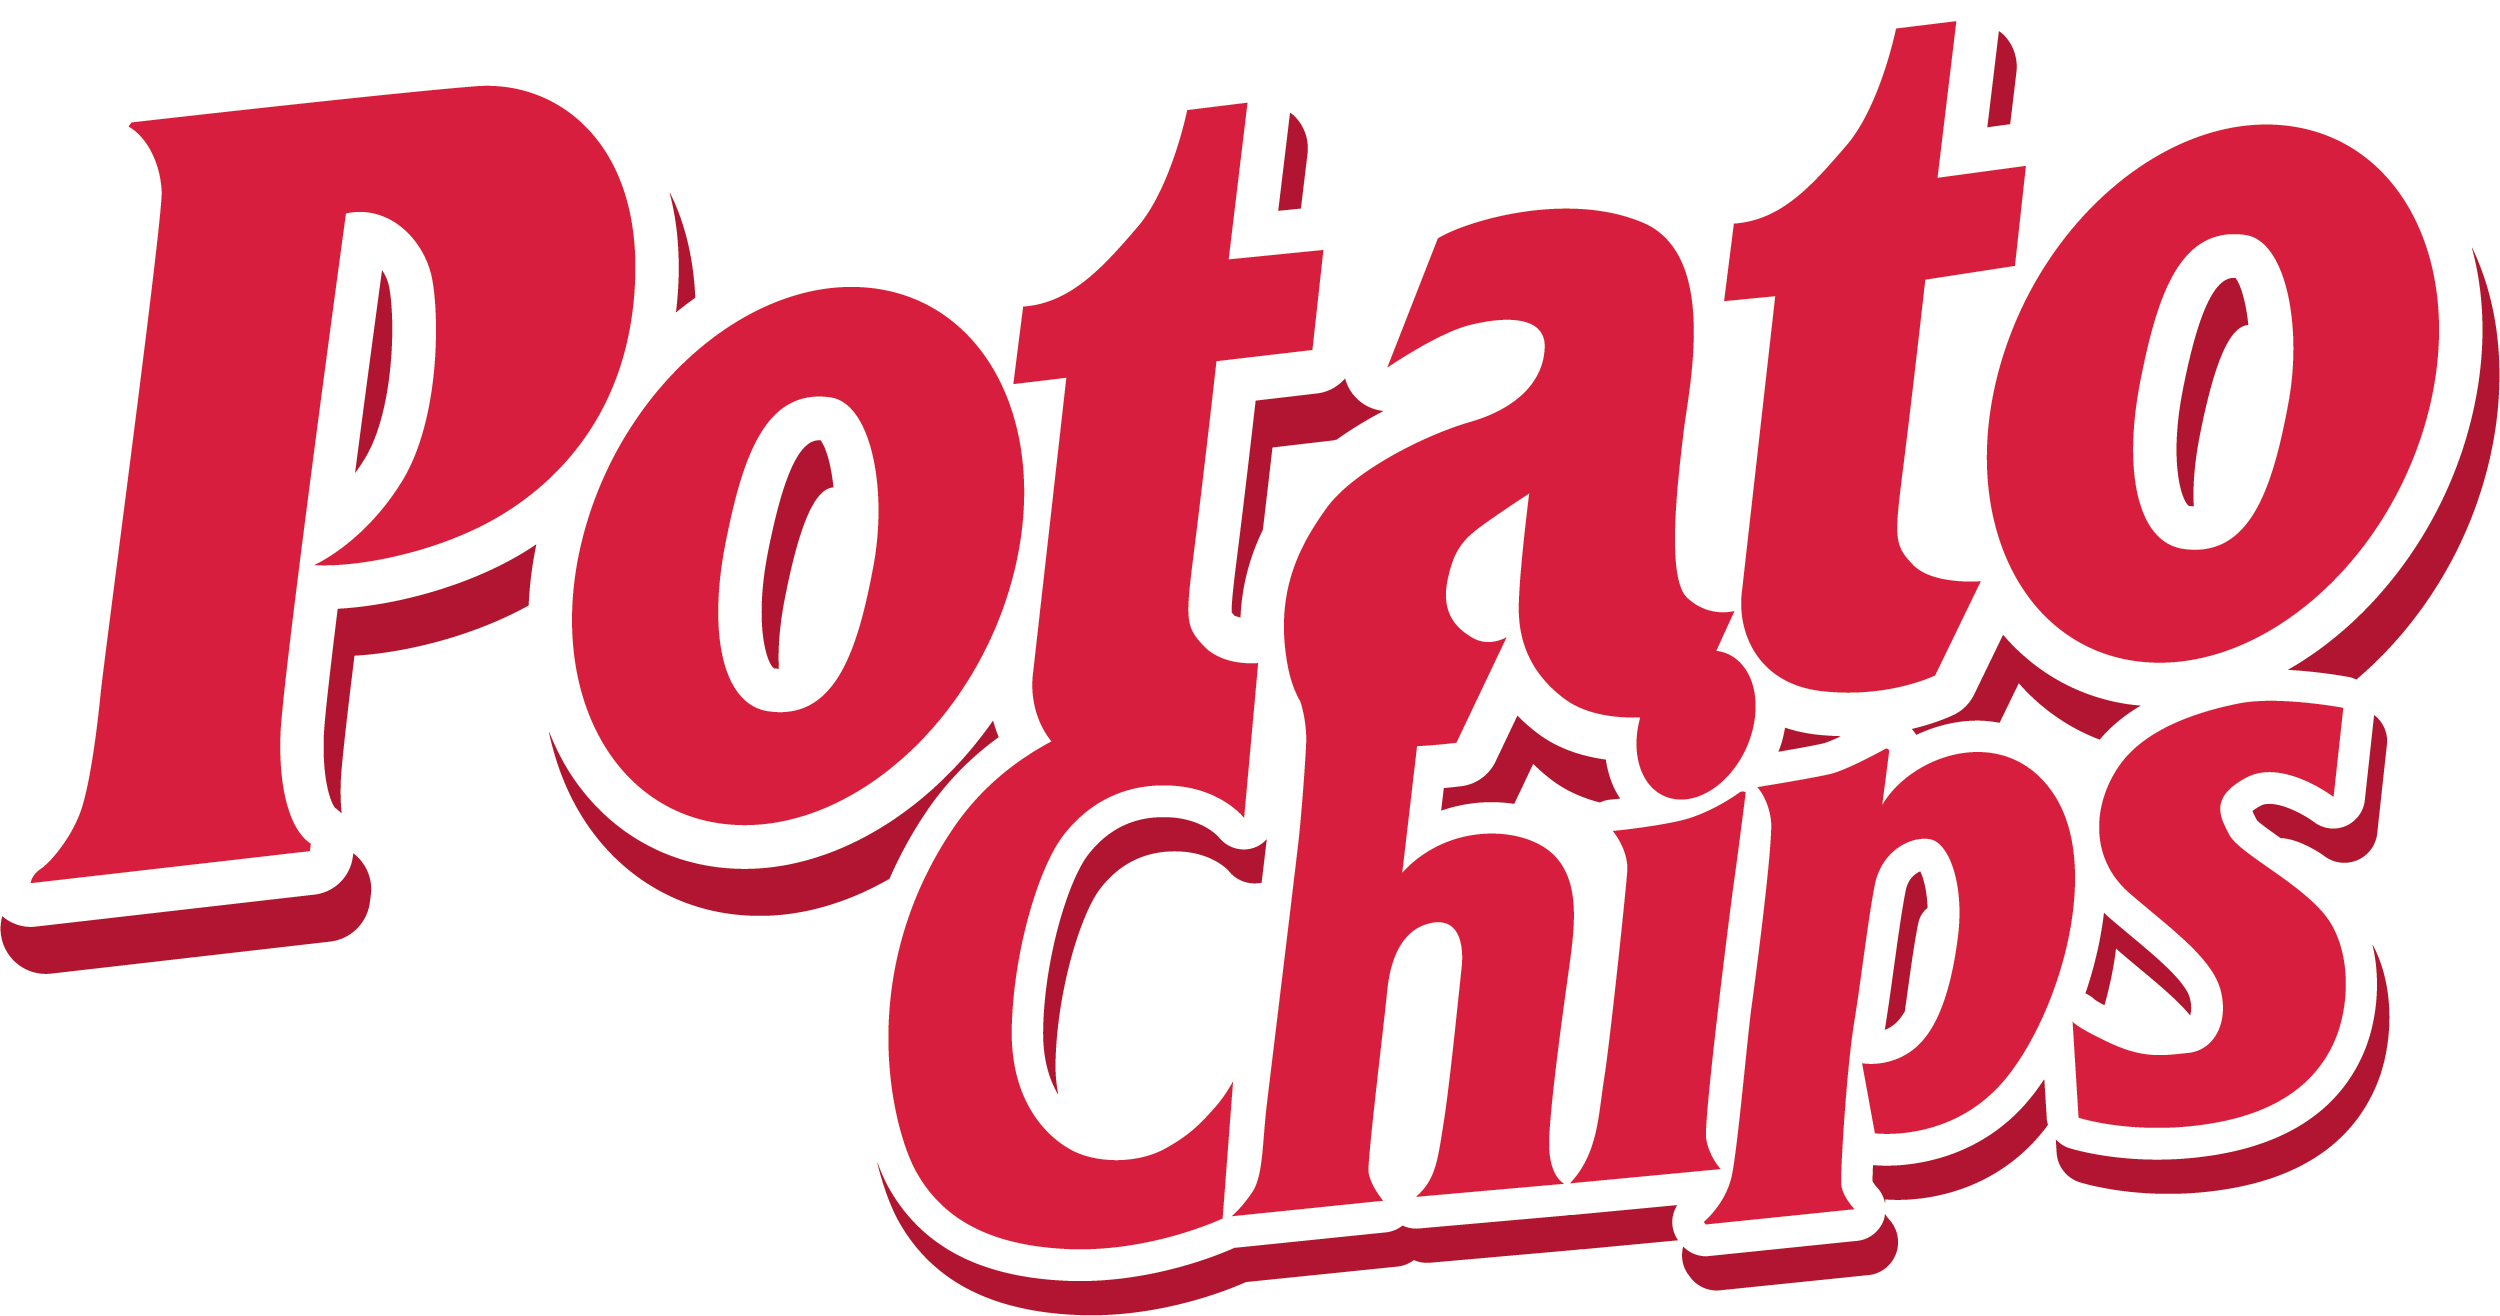 Potato Chips logo